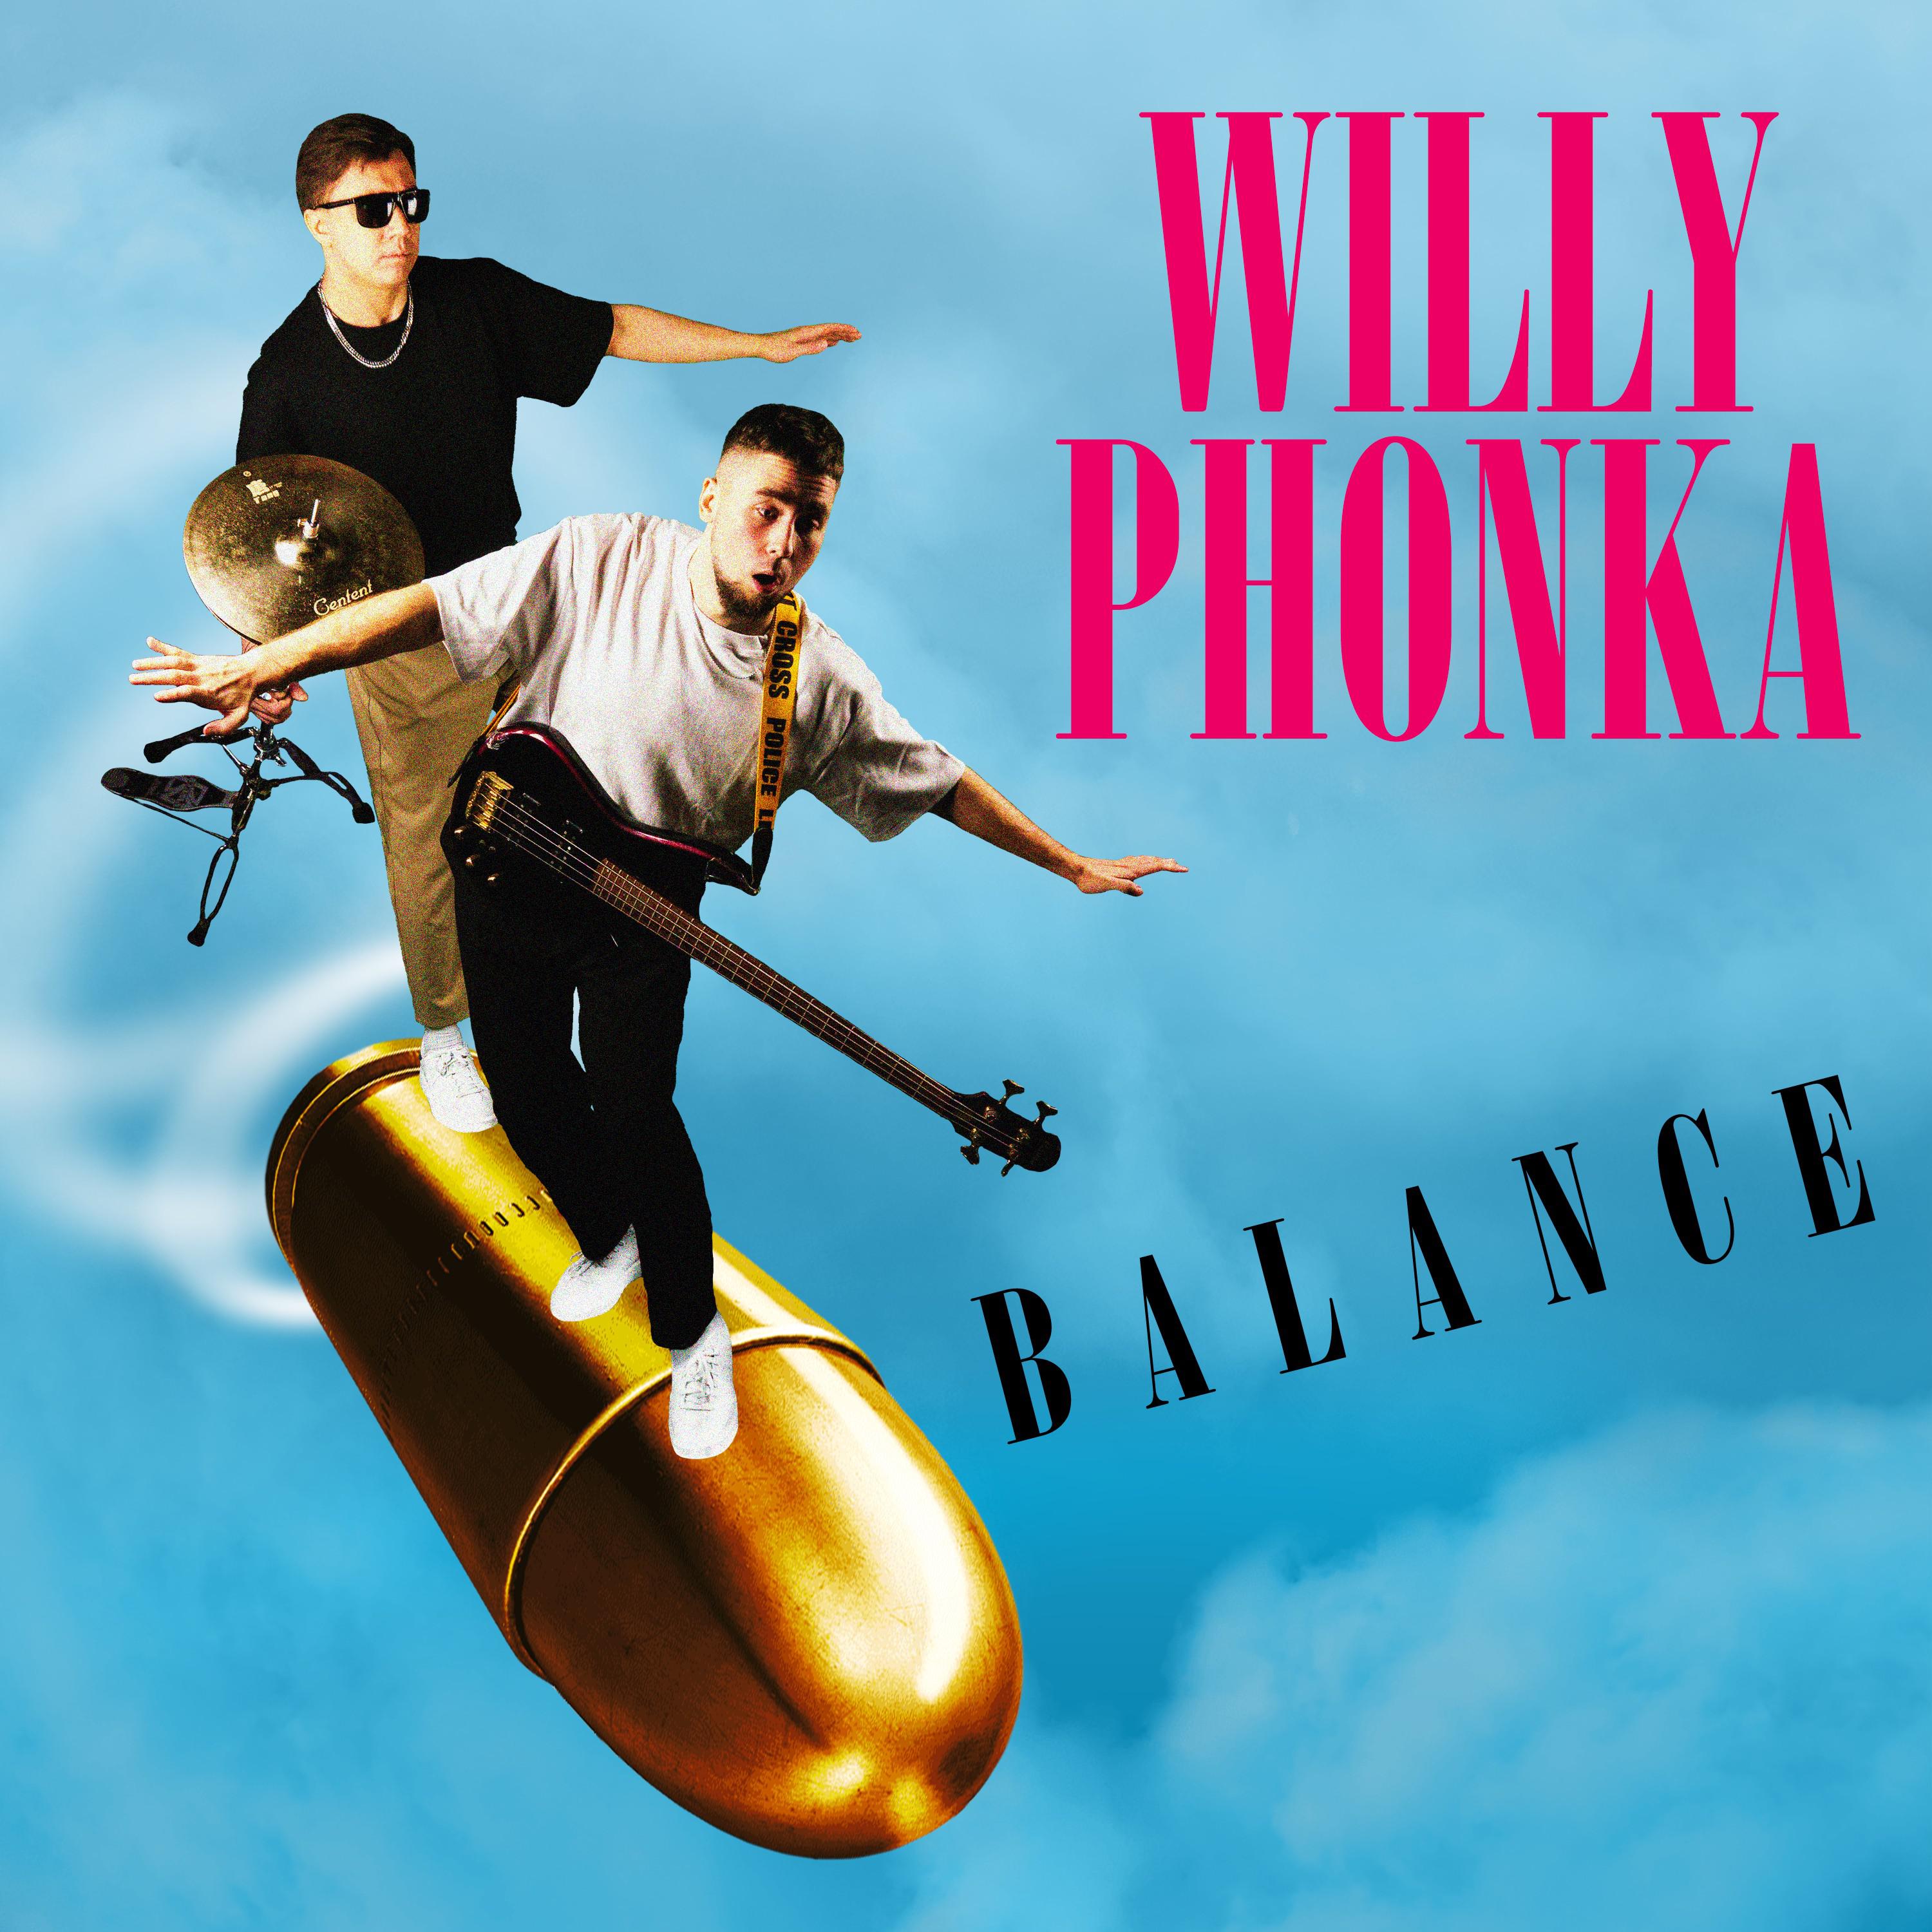 Постер альбома Balance